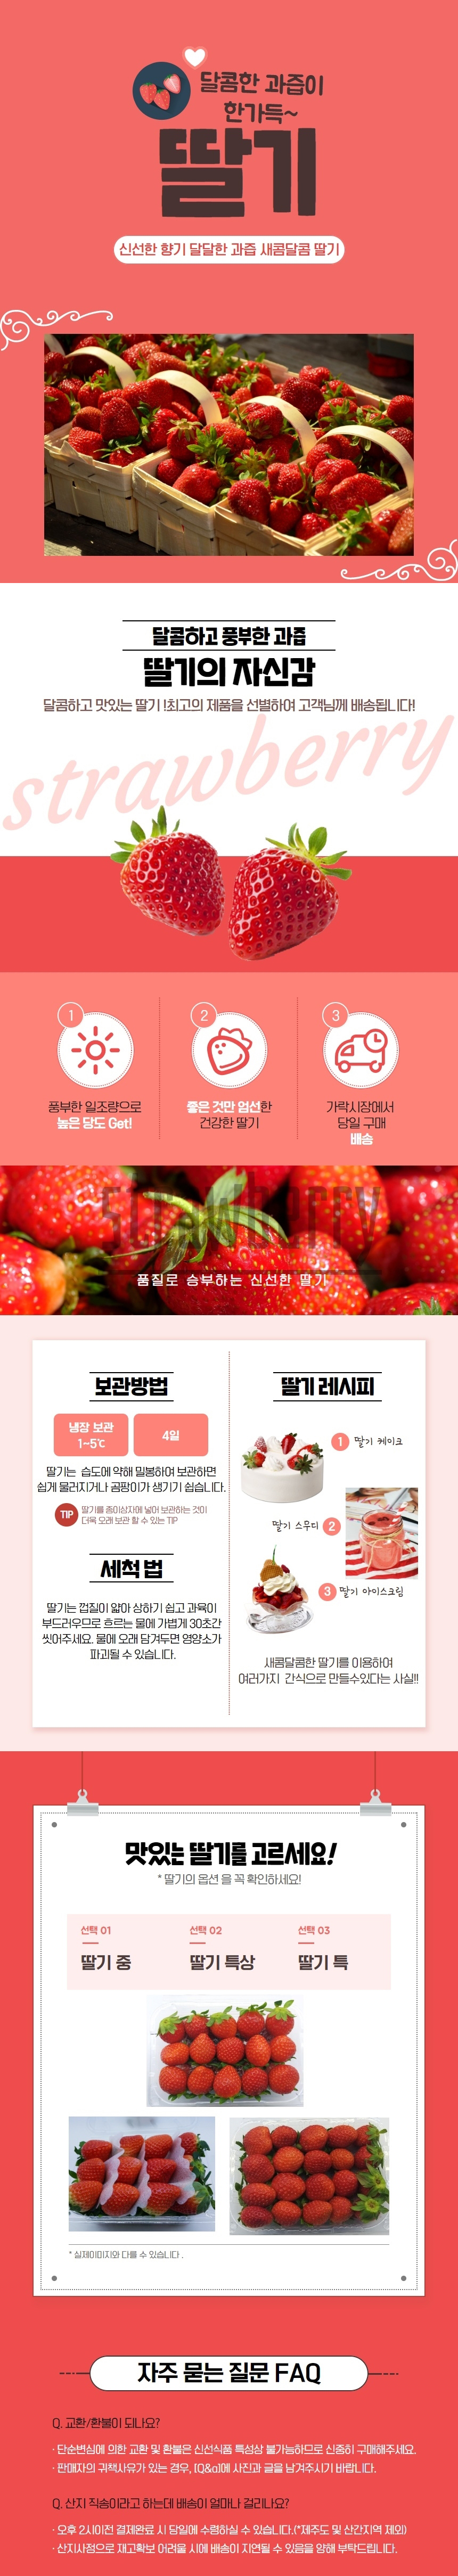 strawberry_UP.jpg